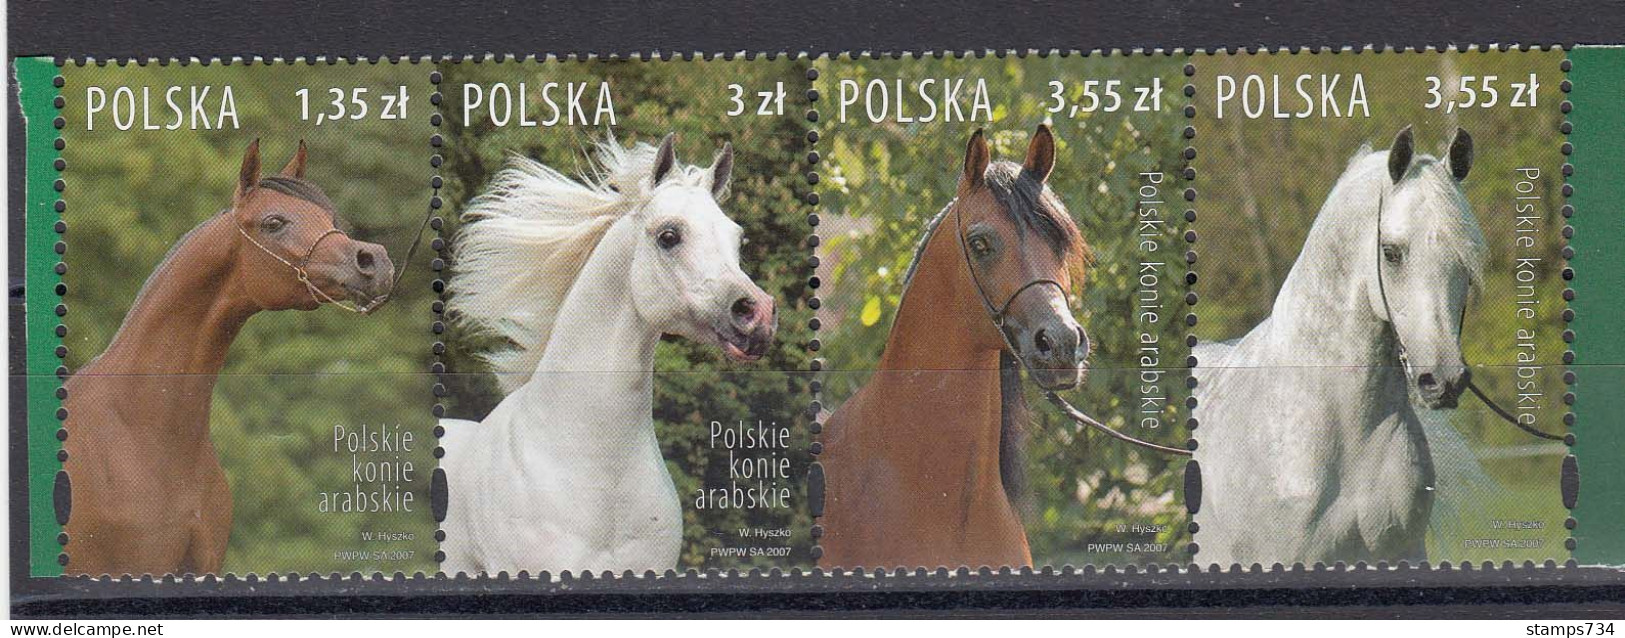 Poland 2007 - Horses, Mi-Nr. 4323/26, MNH** - Ungebraucht